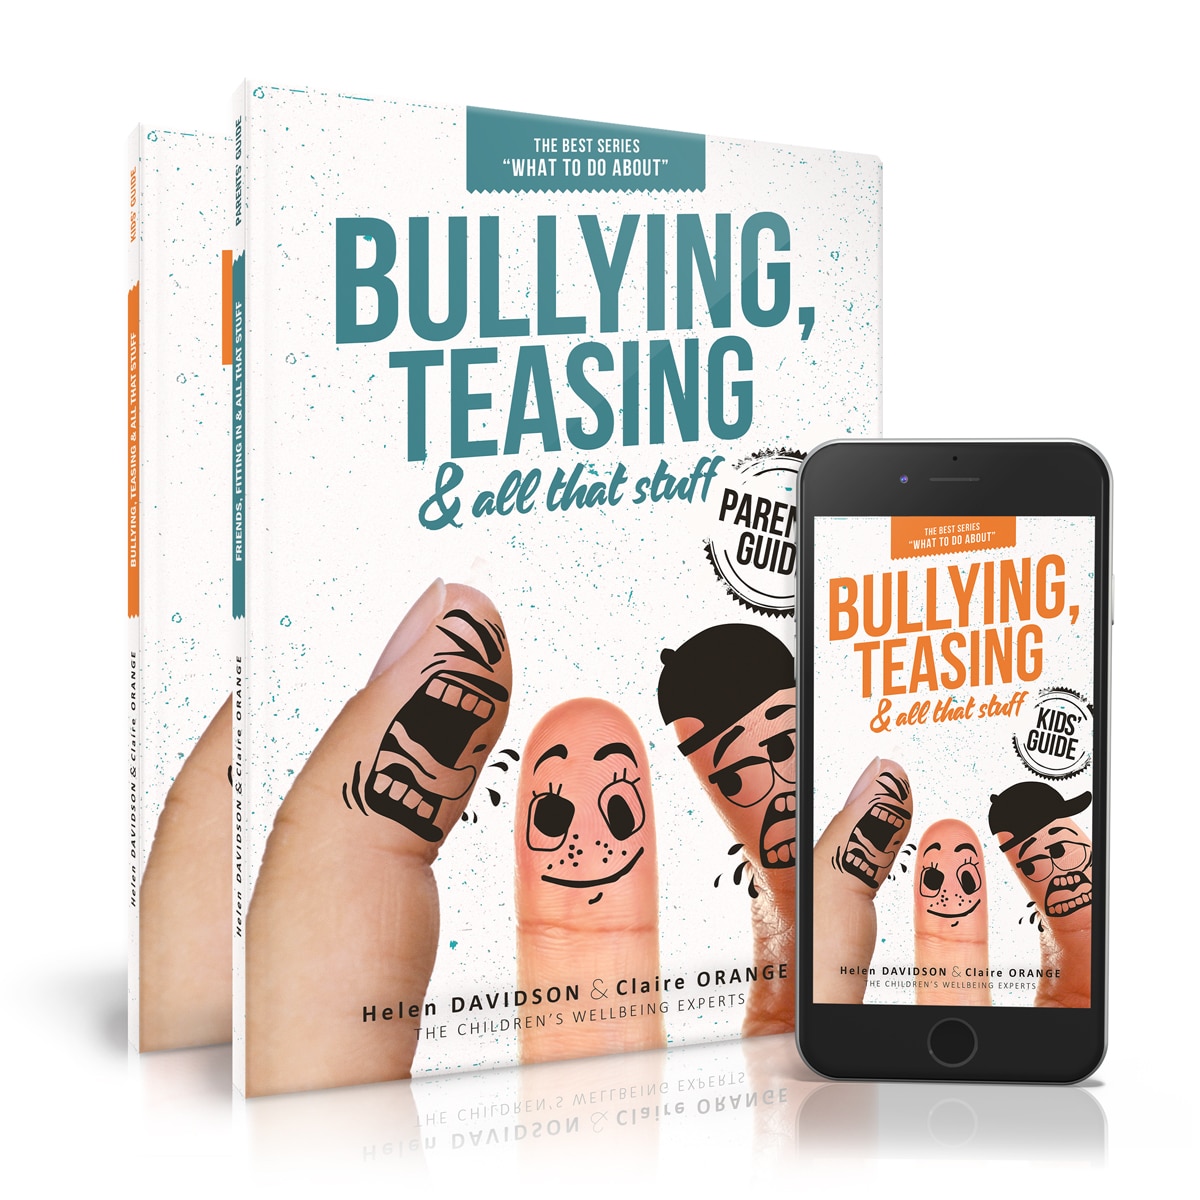 Bullying & teasing